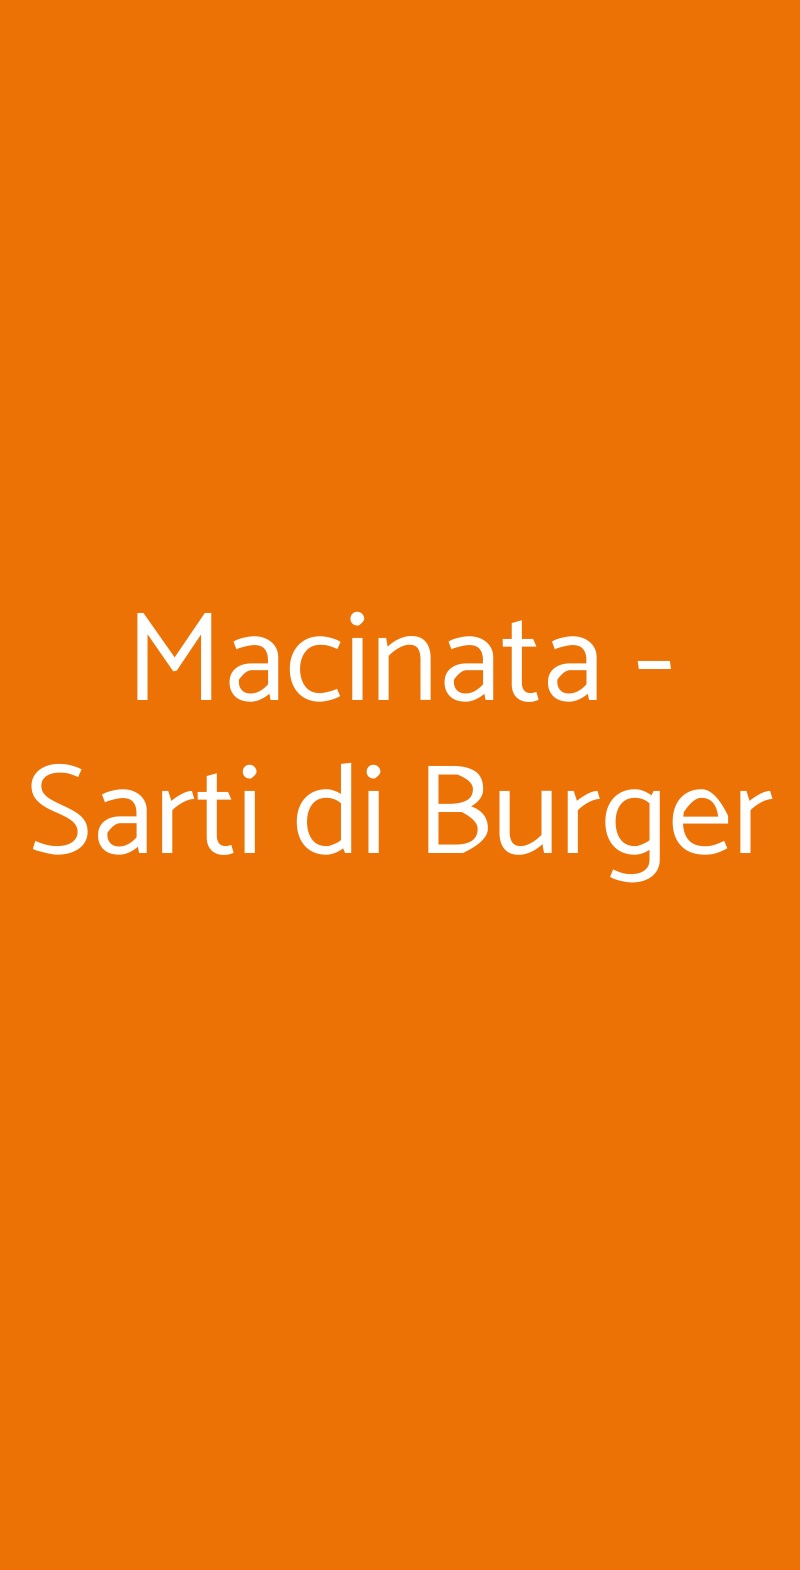 Macinata - Sarti di Burger Milano menù 1 pagina